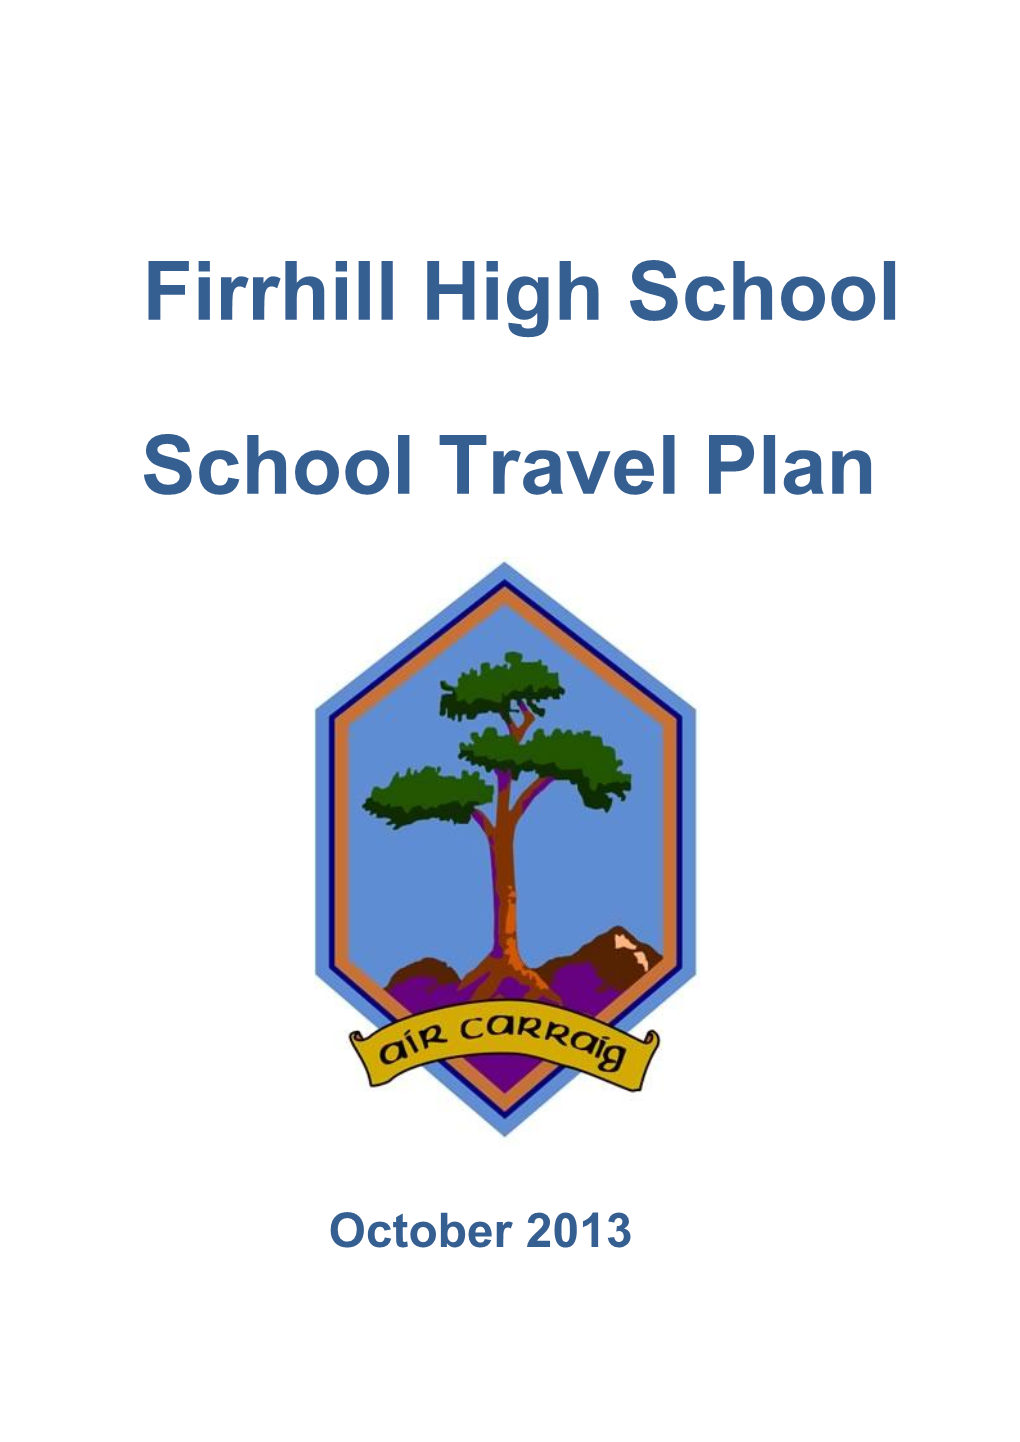 Firrhill High School School Travel Plan